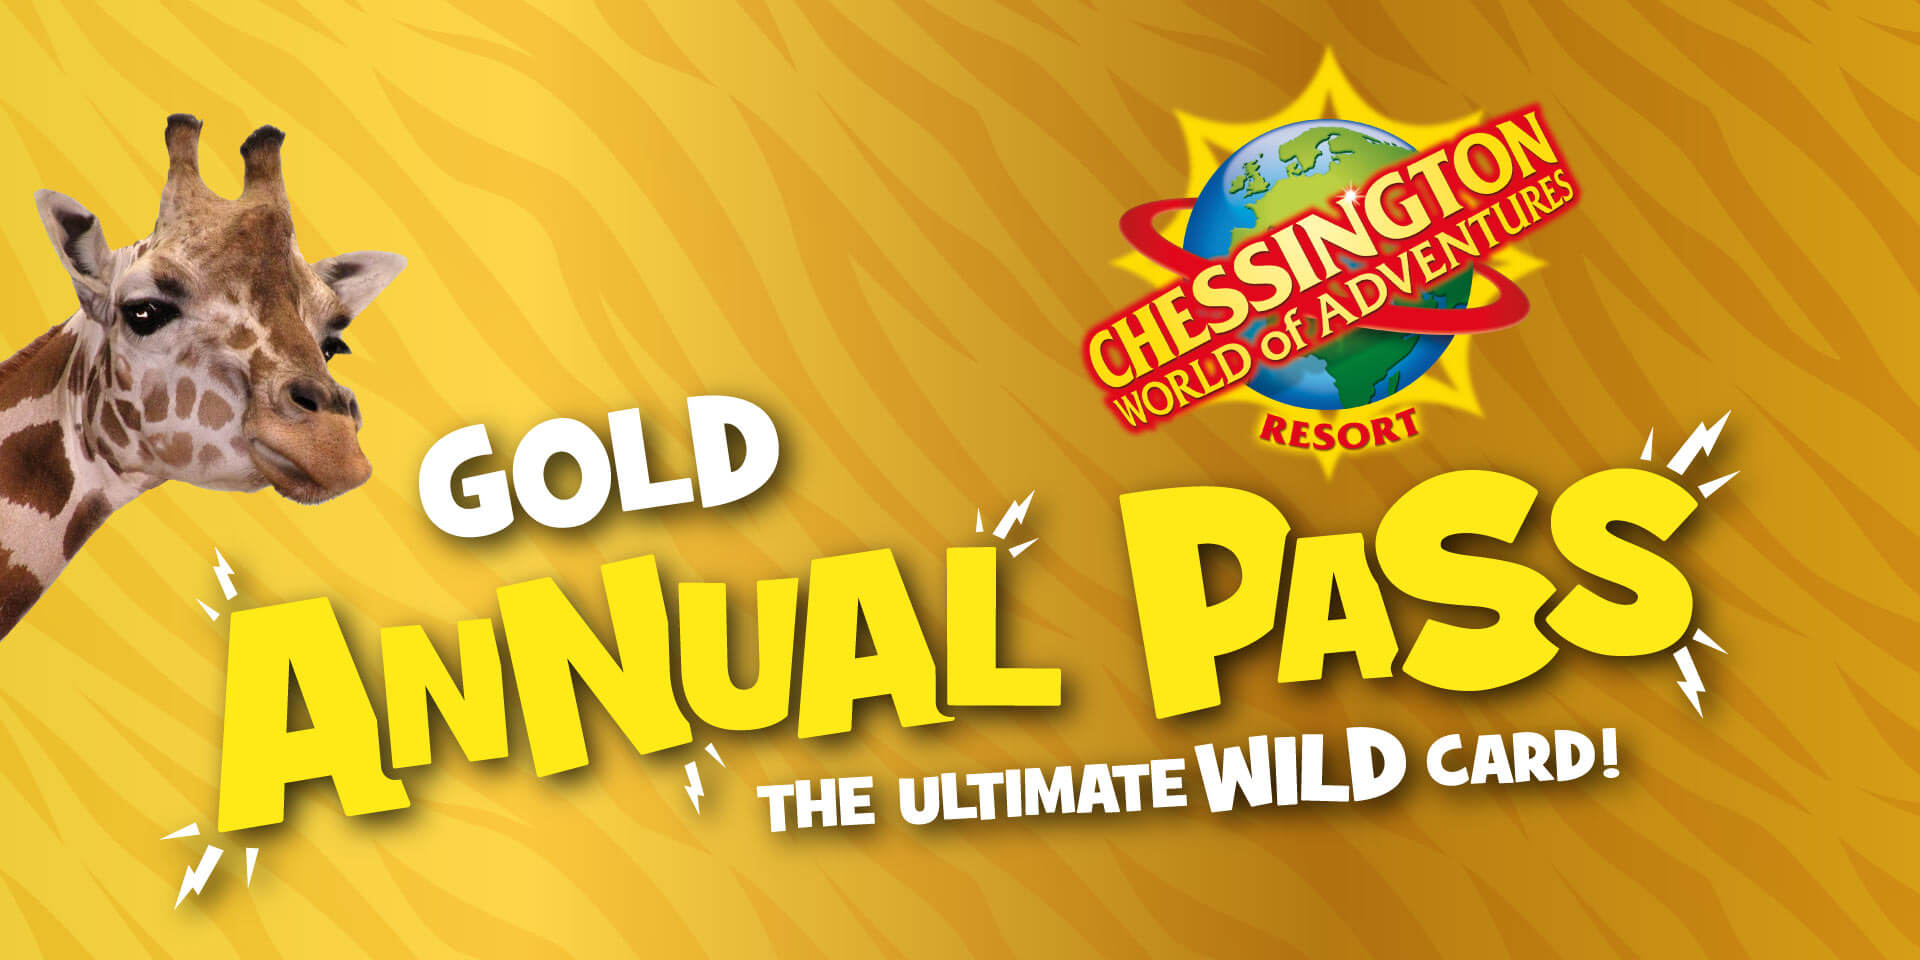 Chessington Theme Park Zoo Annual Pass